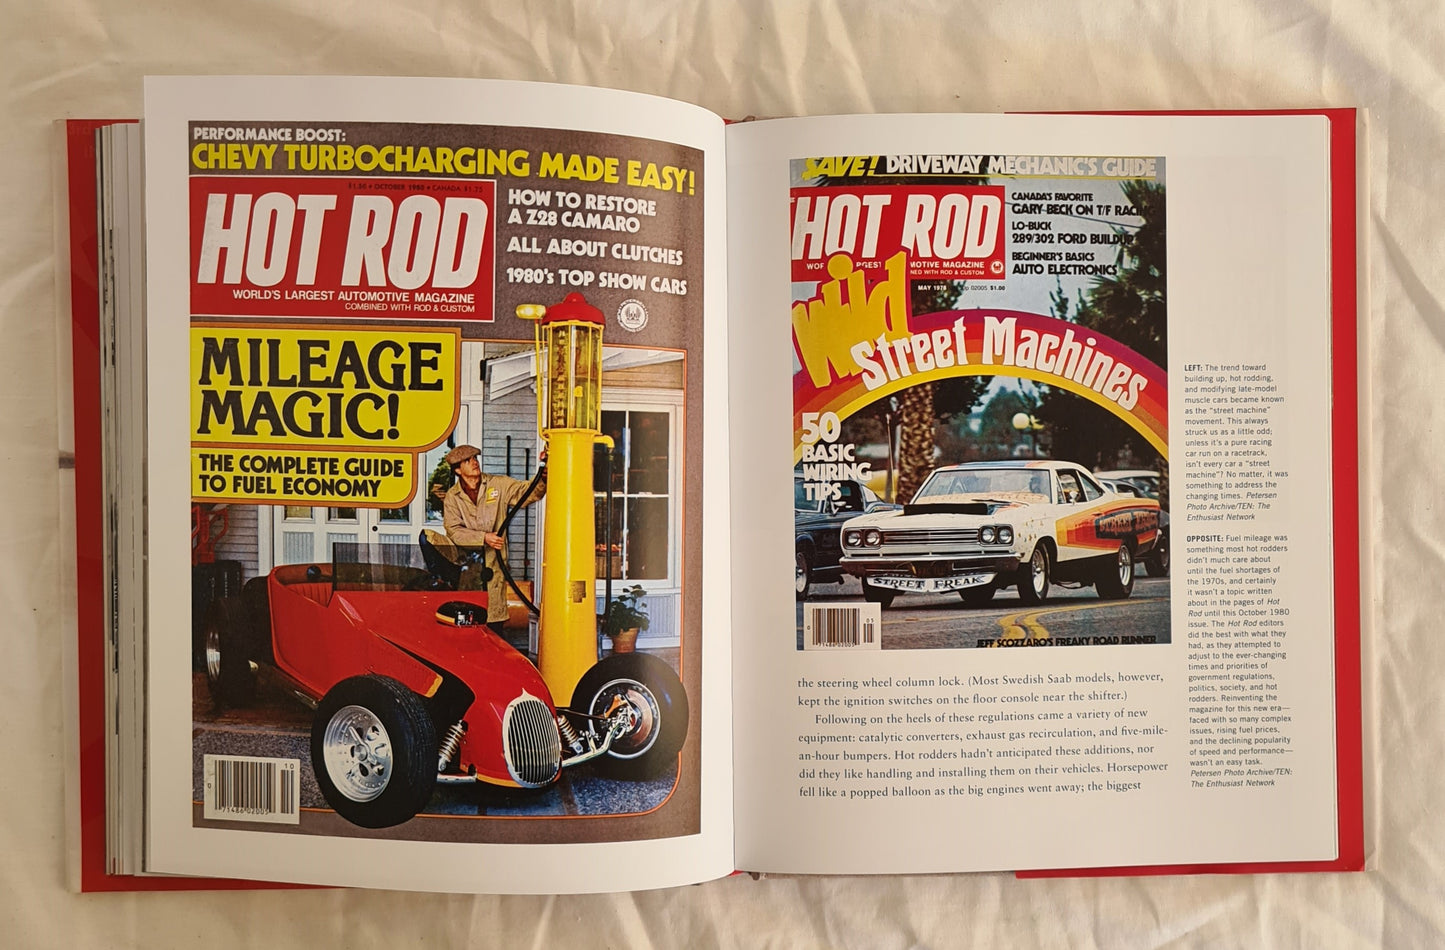 Hot Rod Empire by Matt Stone with Gigi Carleton